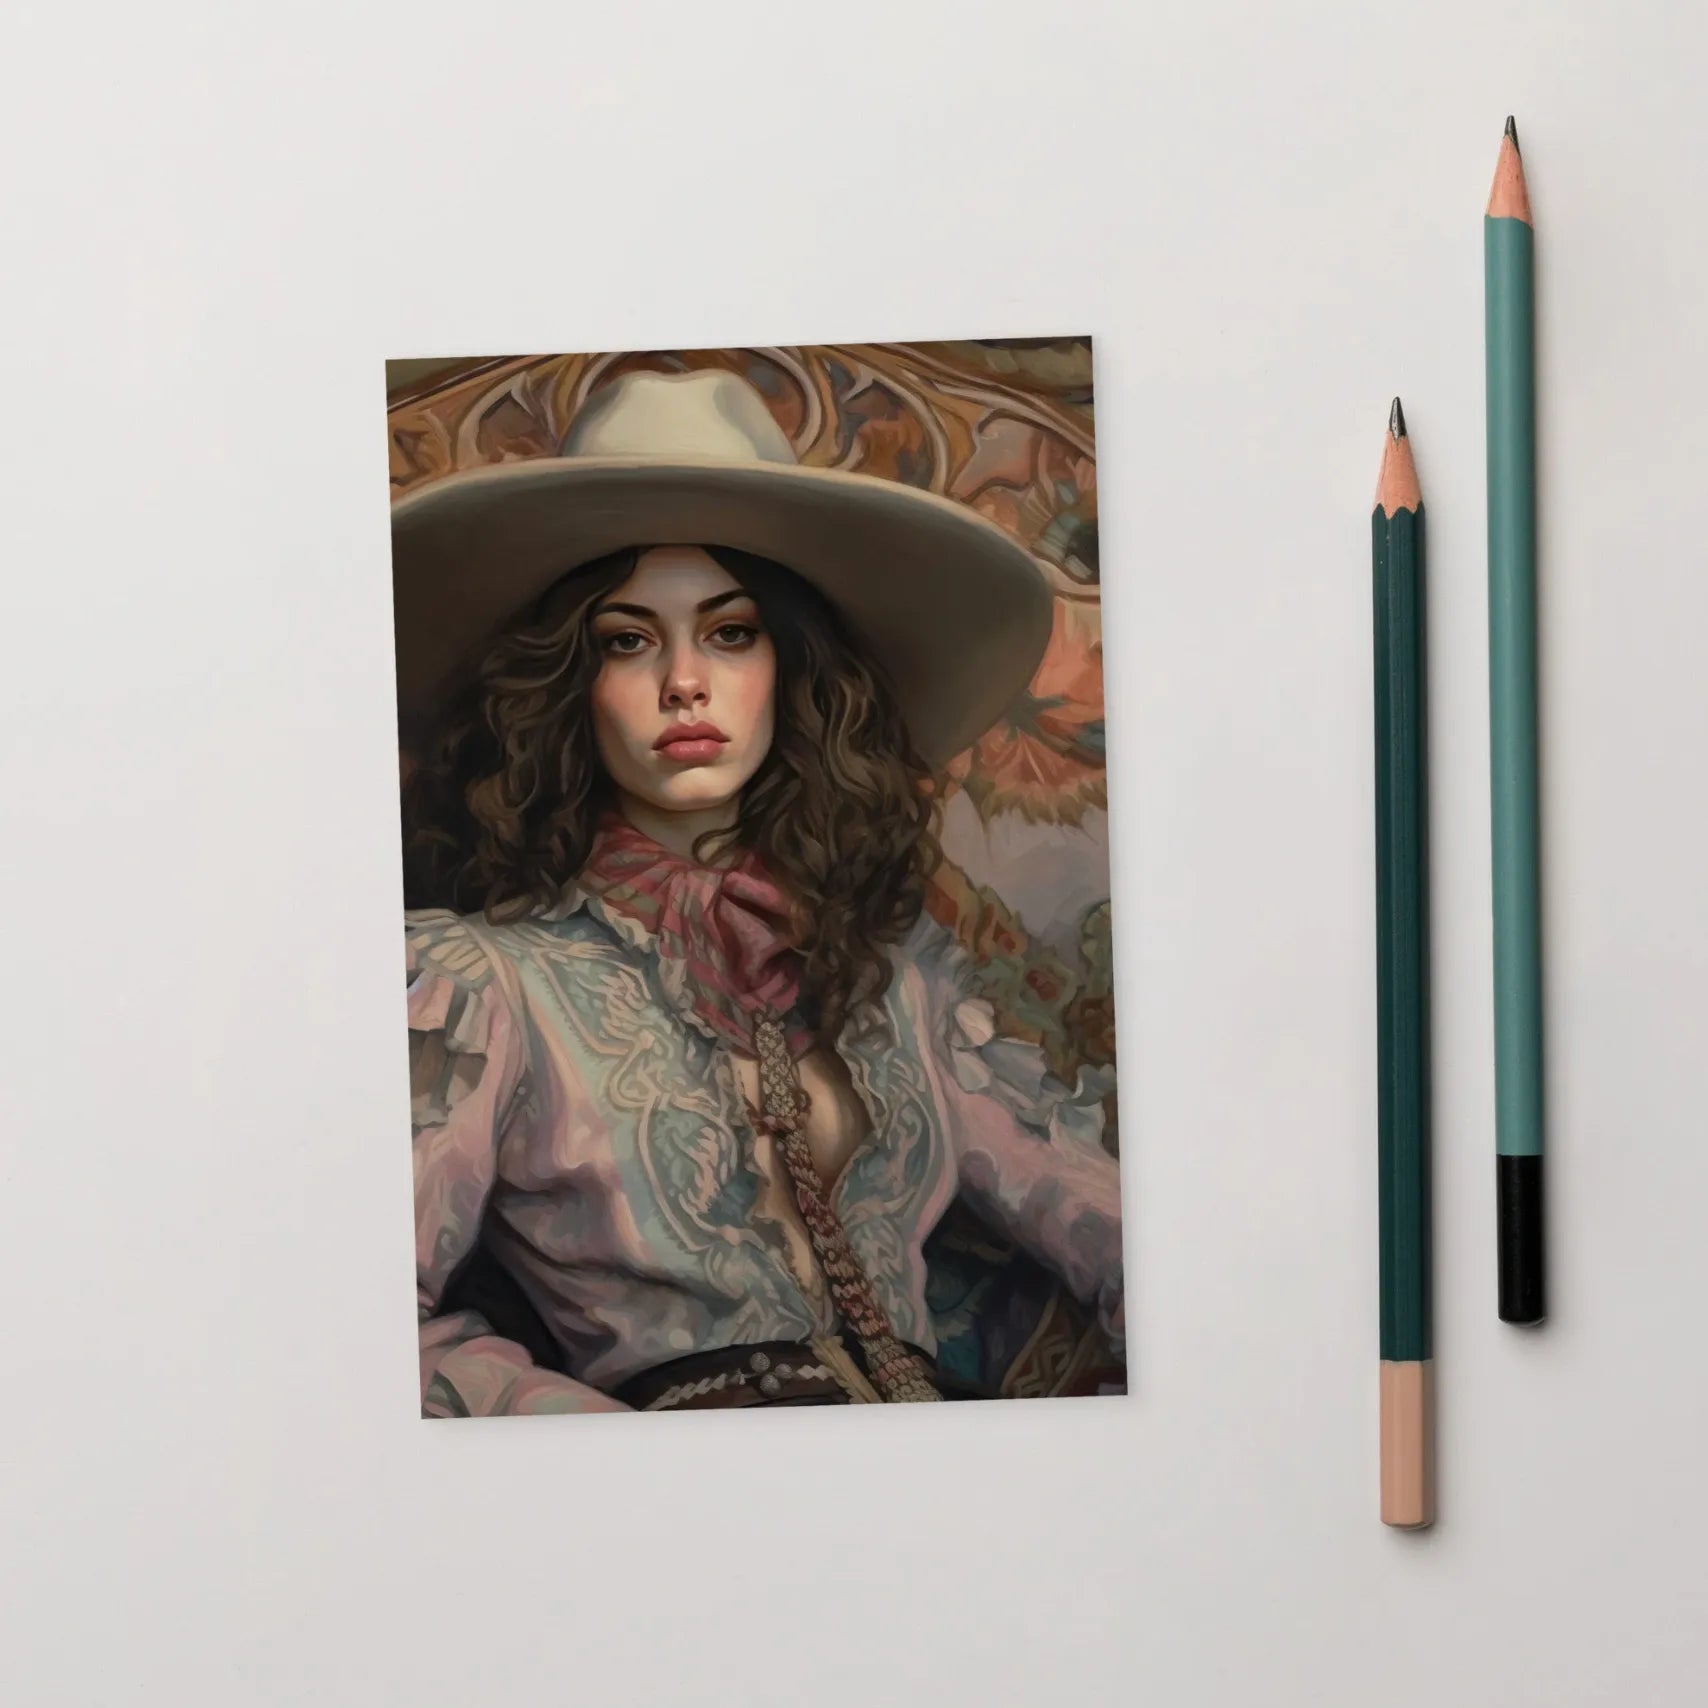 Alex - Lesbian Cowgirl Art Print - Wlw Sapphic Queerart - 4’x6’ - Posters Prints & Visual Artwork - Aesthetic Art